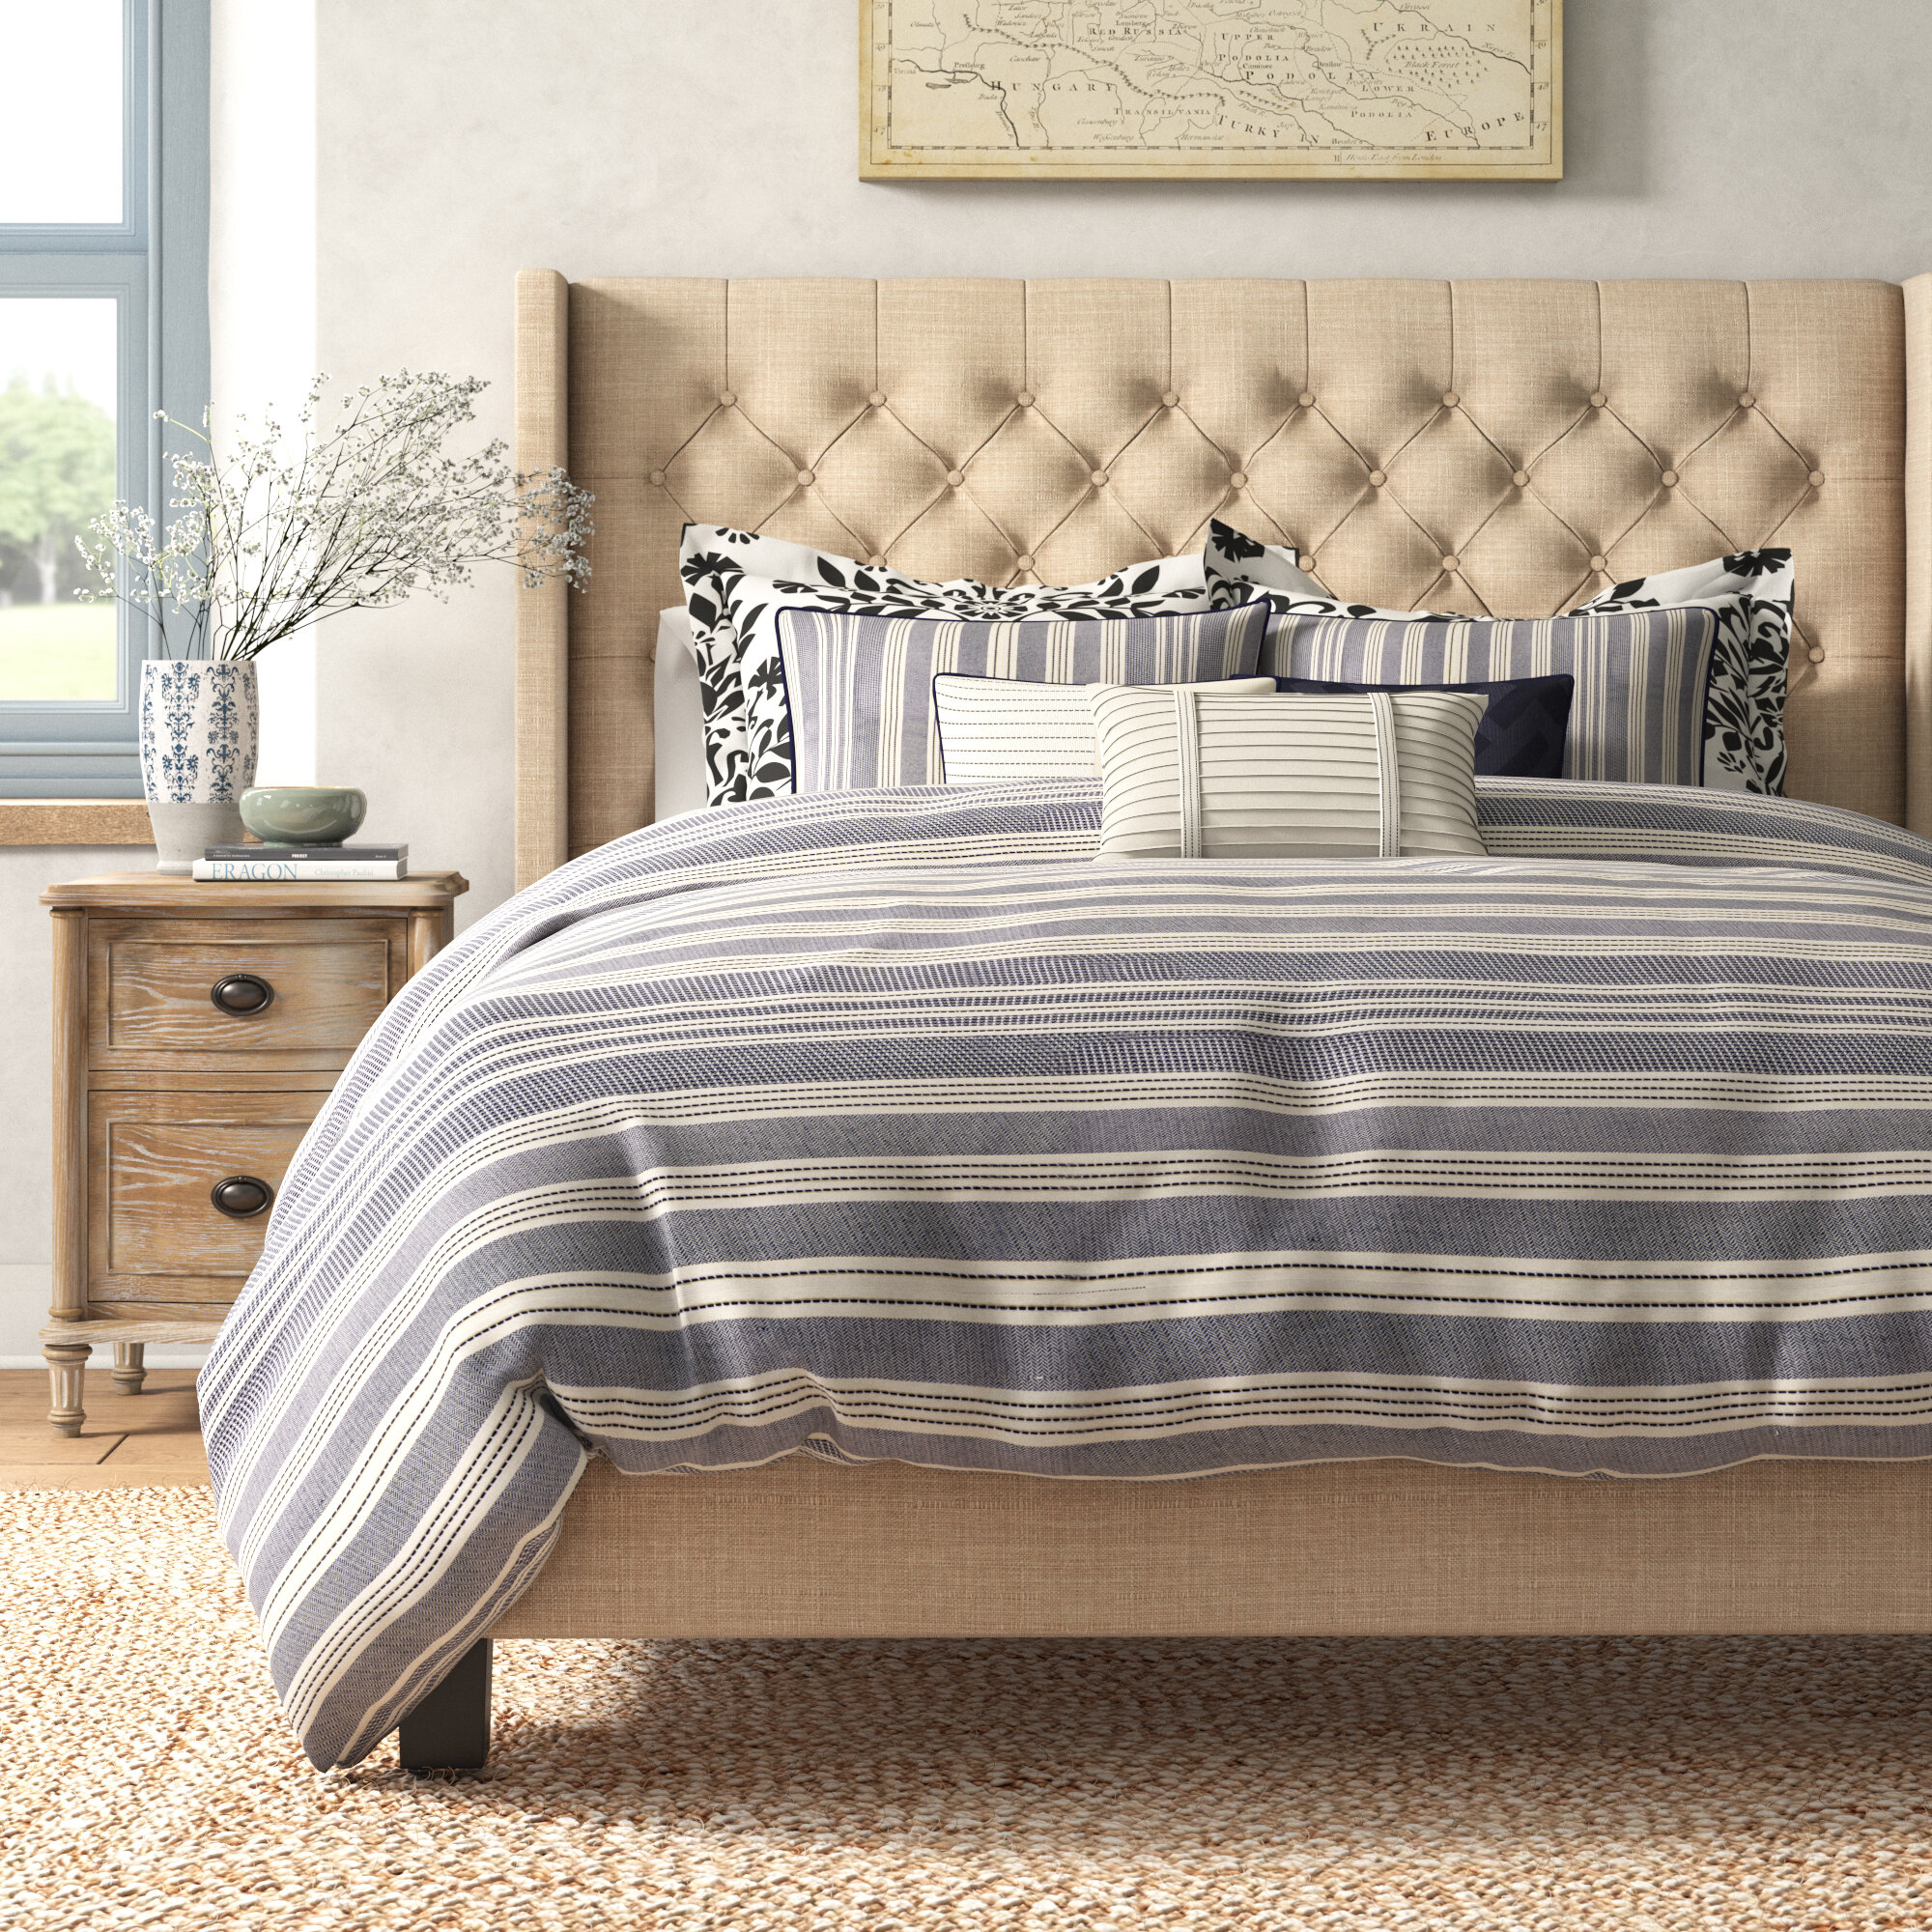 Madison Park Signature Farmhouse Blue White Cotton Blend Modern Contemporary Comforter Set